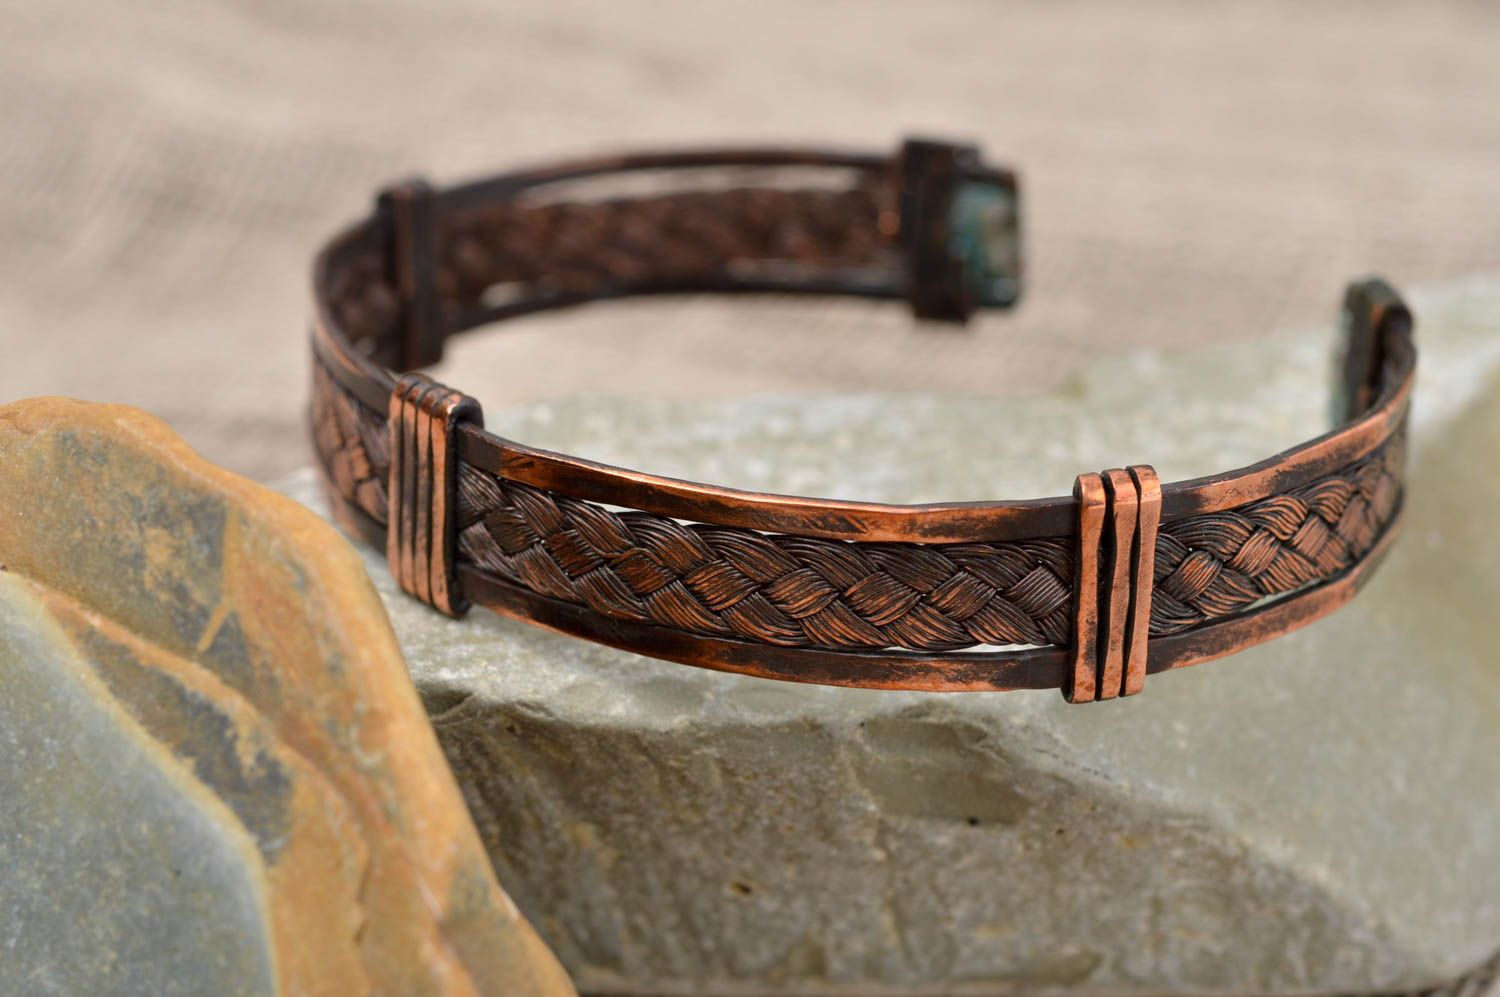 Unusual handmade wrist bracelet metal bracelet designs metal craft ideas photo 1